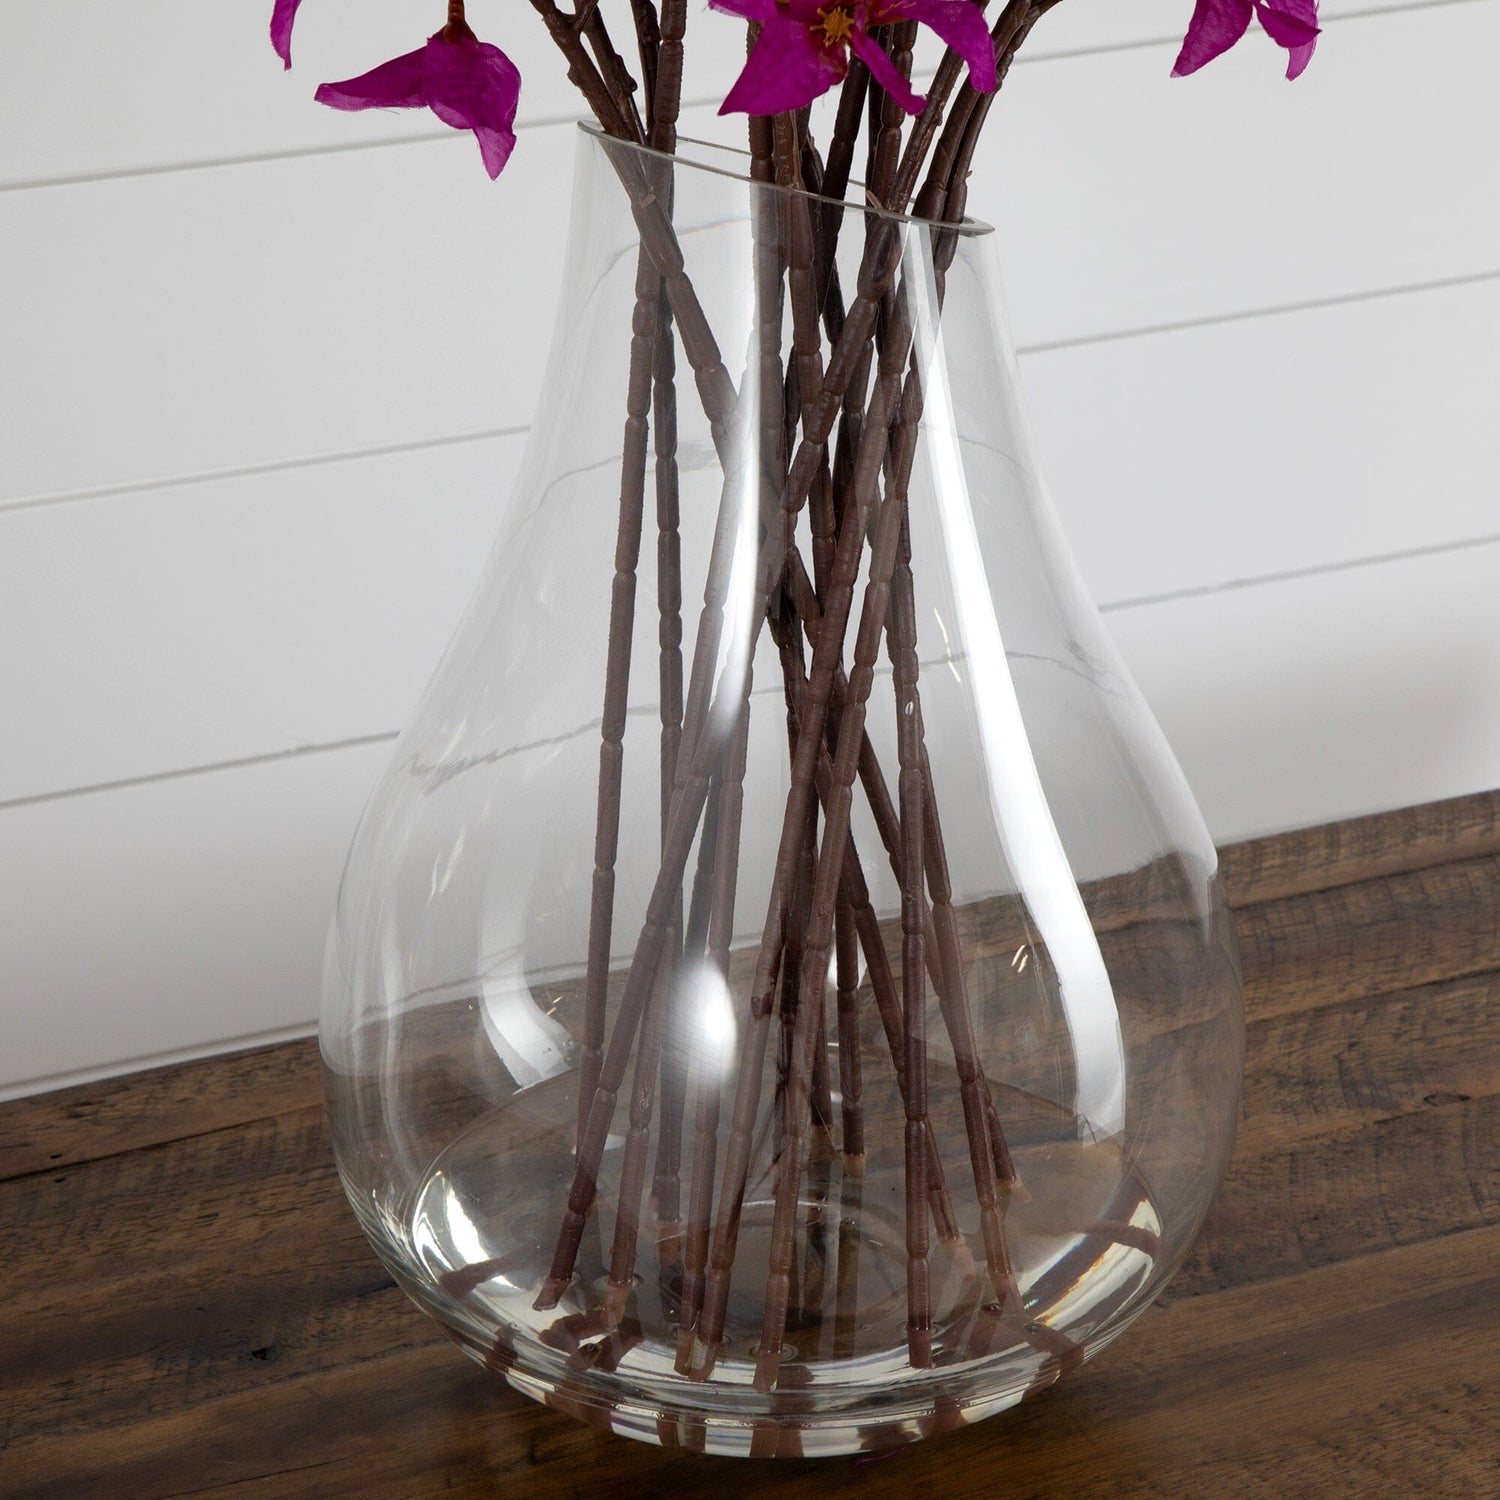 Signature Collection 41” Giant Bougainvillea Artificial Arrangement in Glass Vase